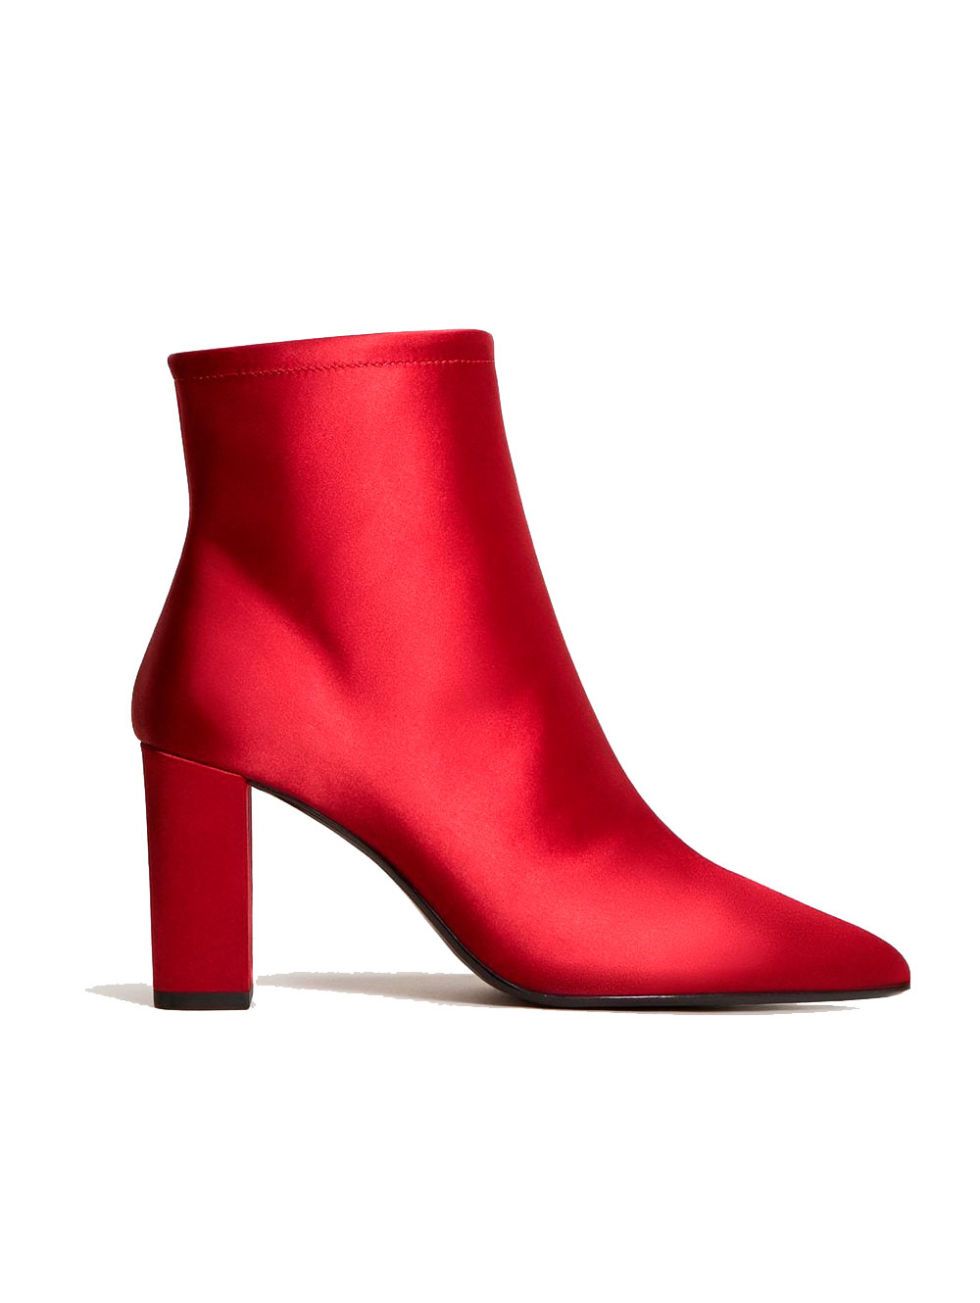 Footwear, Shoe, Red, High heels, Boot, Leather, Magenta, 